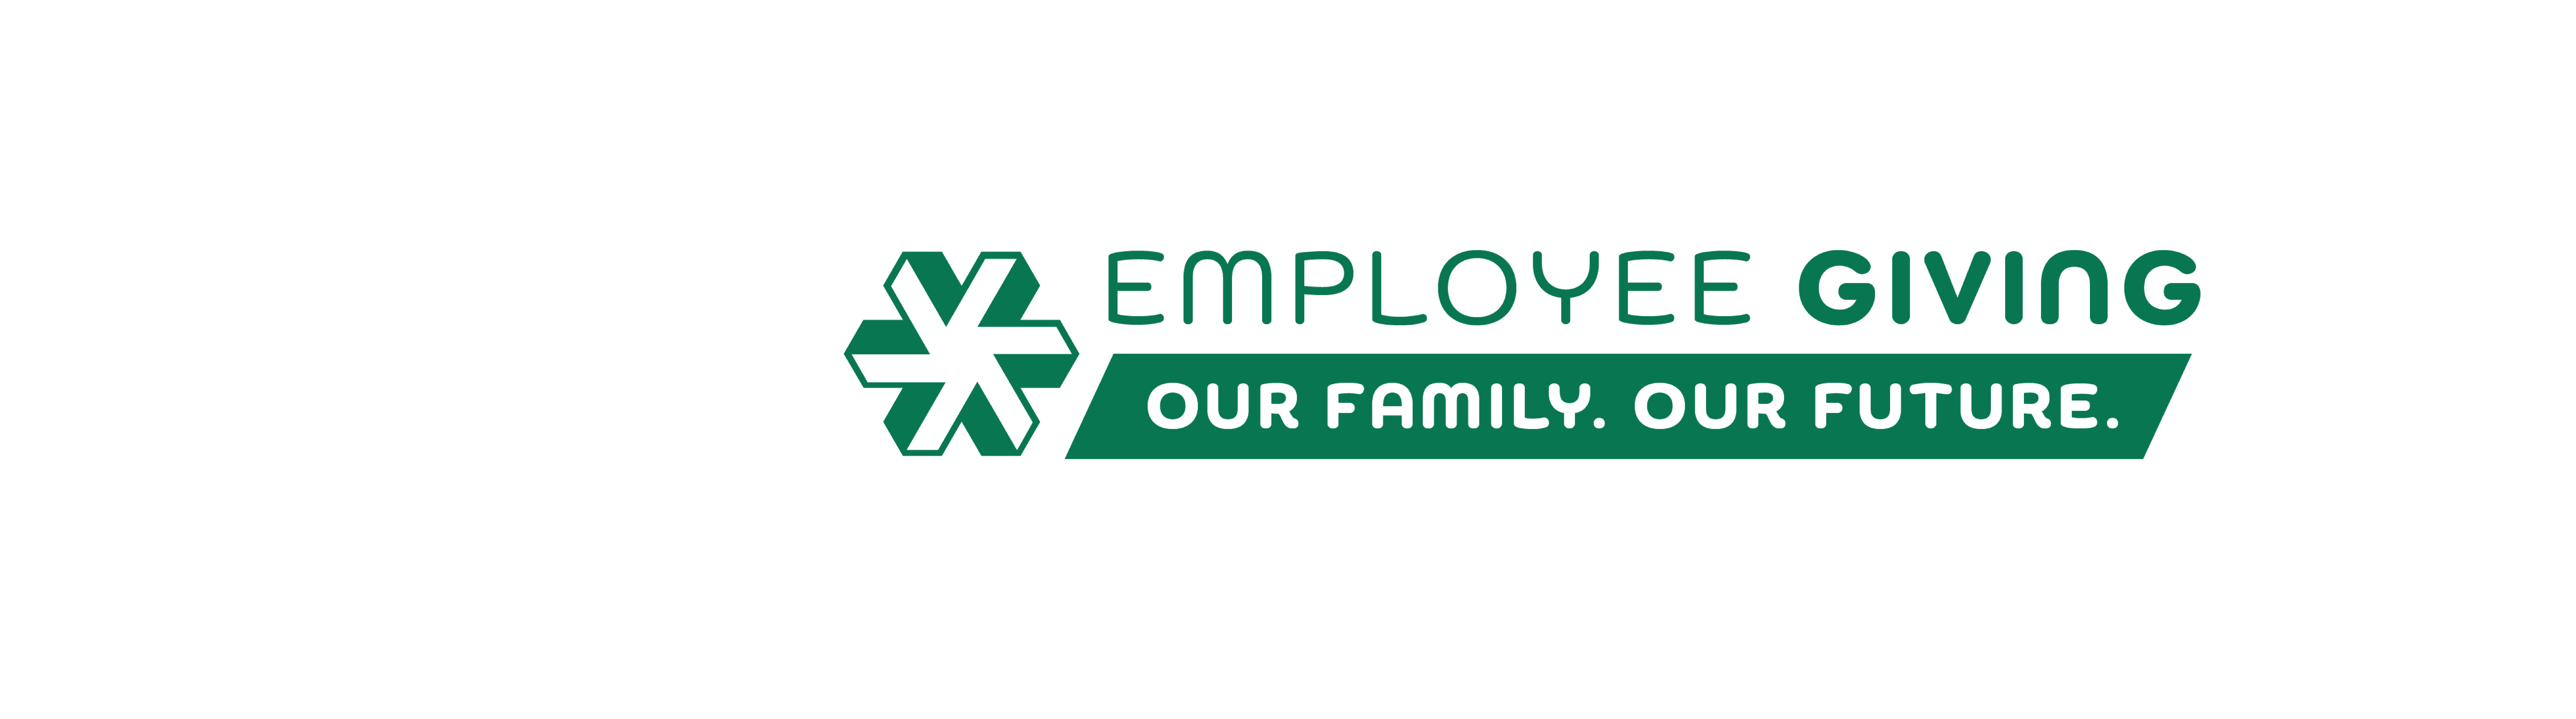 EmployeeGiving-Logos-Color-02